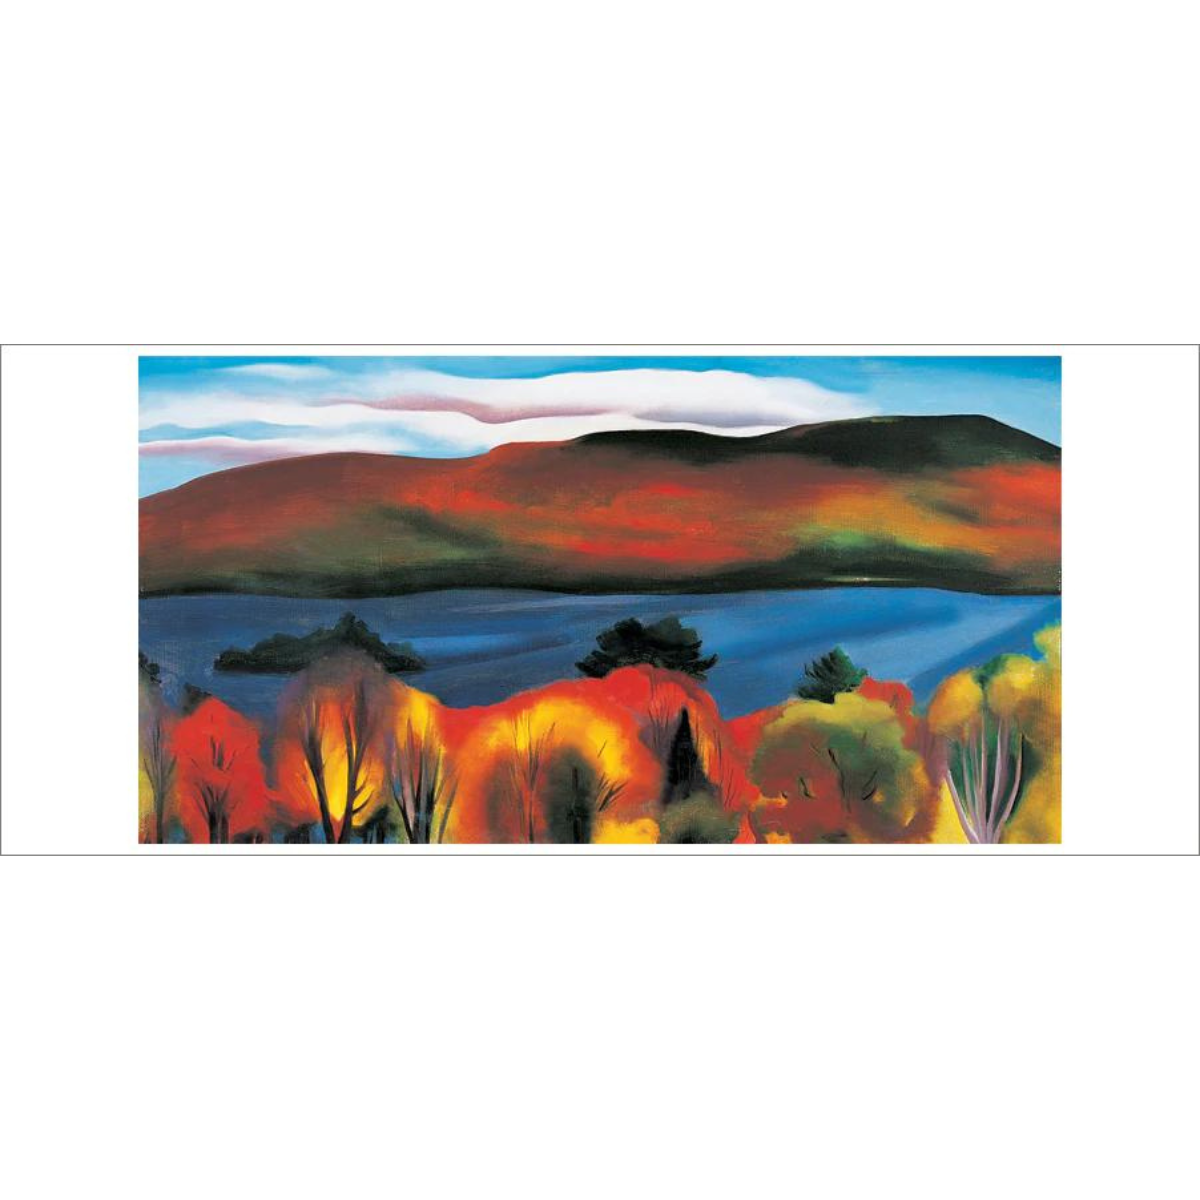 Georgia O&#39;Keeffe Landscapes Boxed Note Card Set